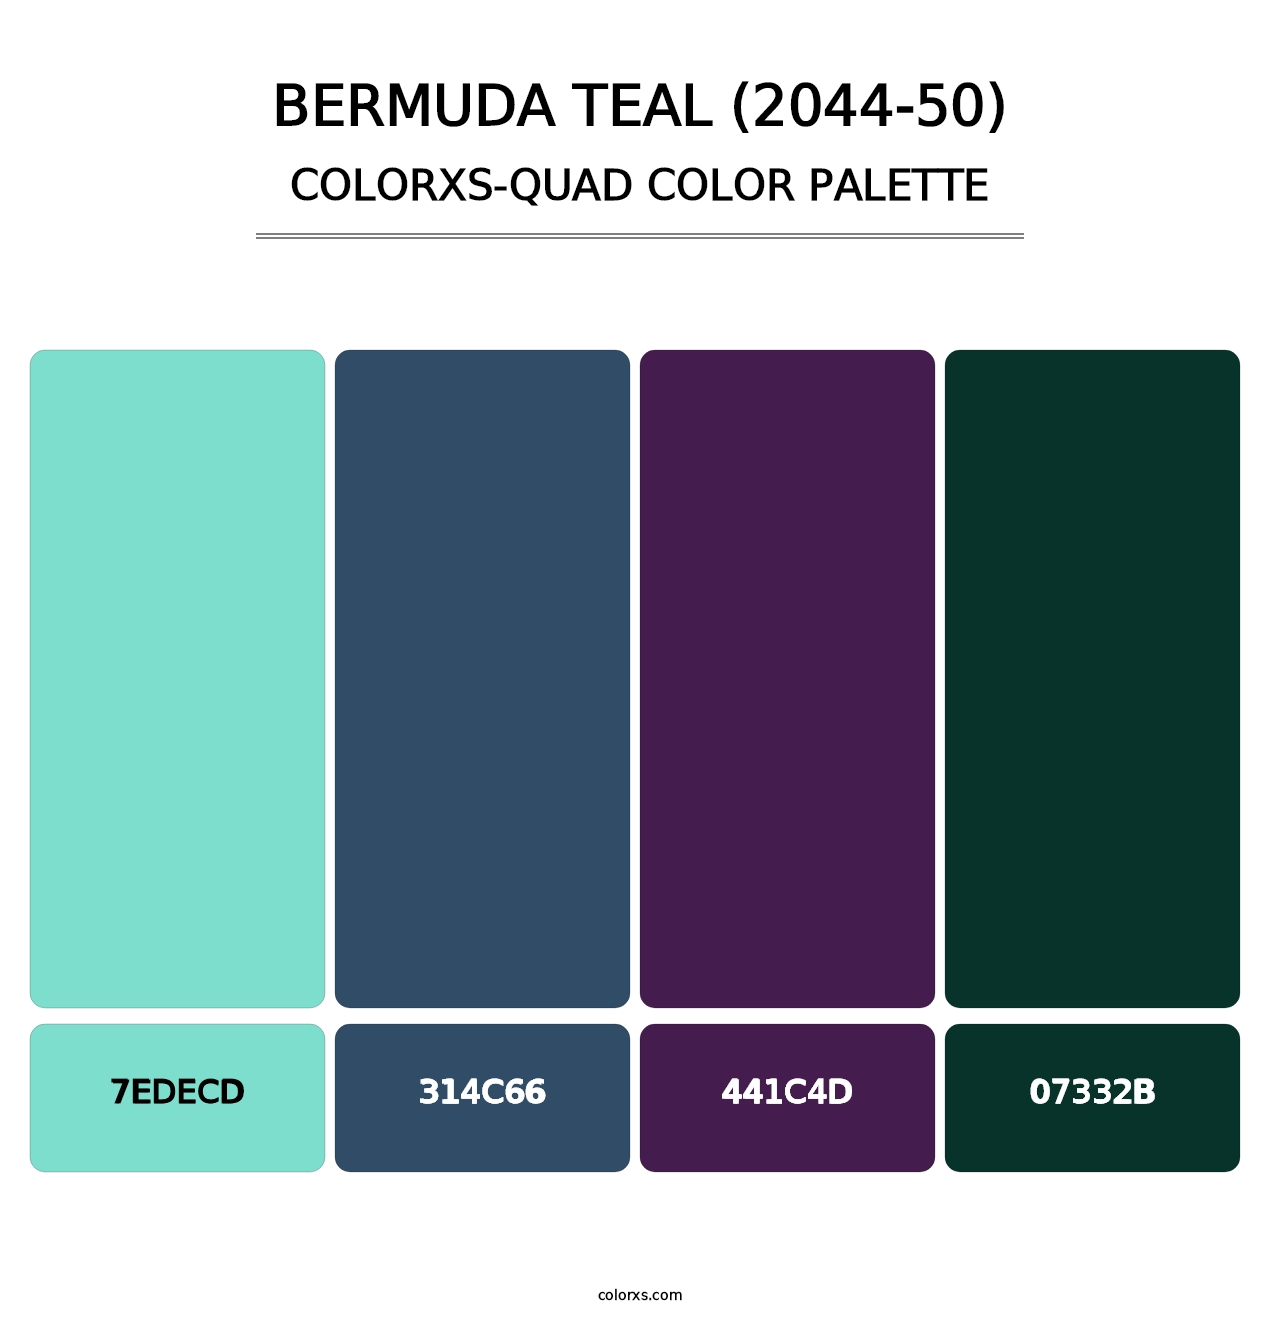 Bermuda Teal (2044-50) - Colorxs Quad Palette